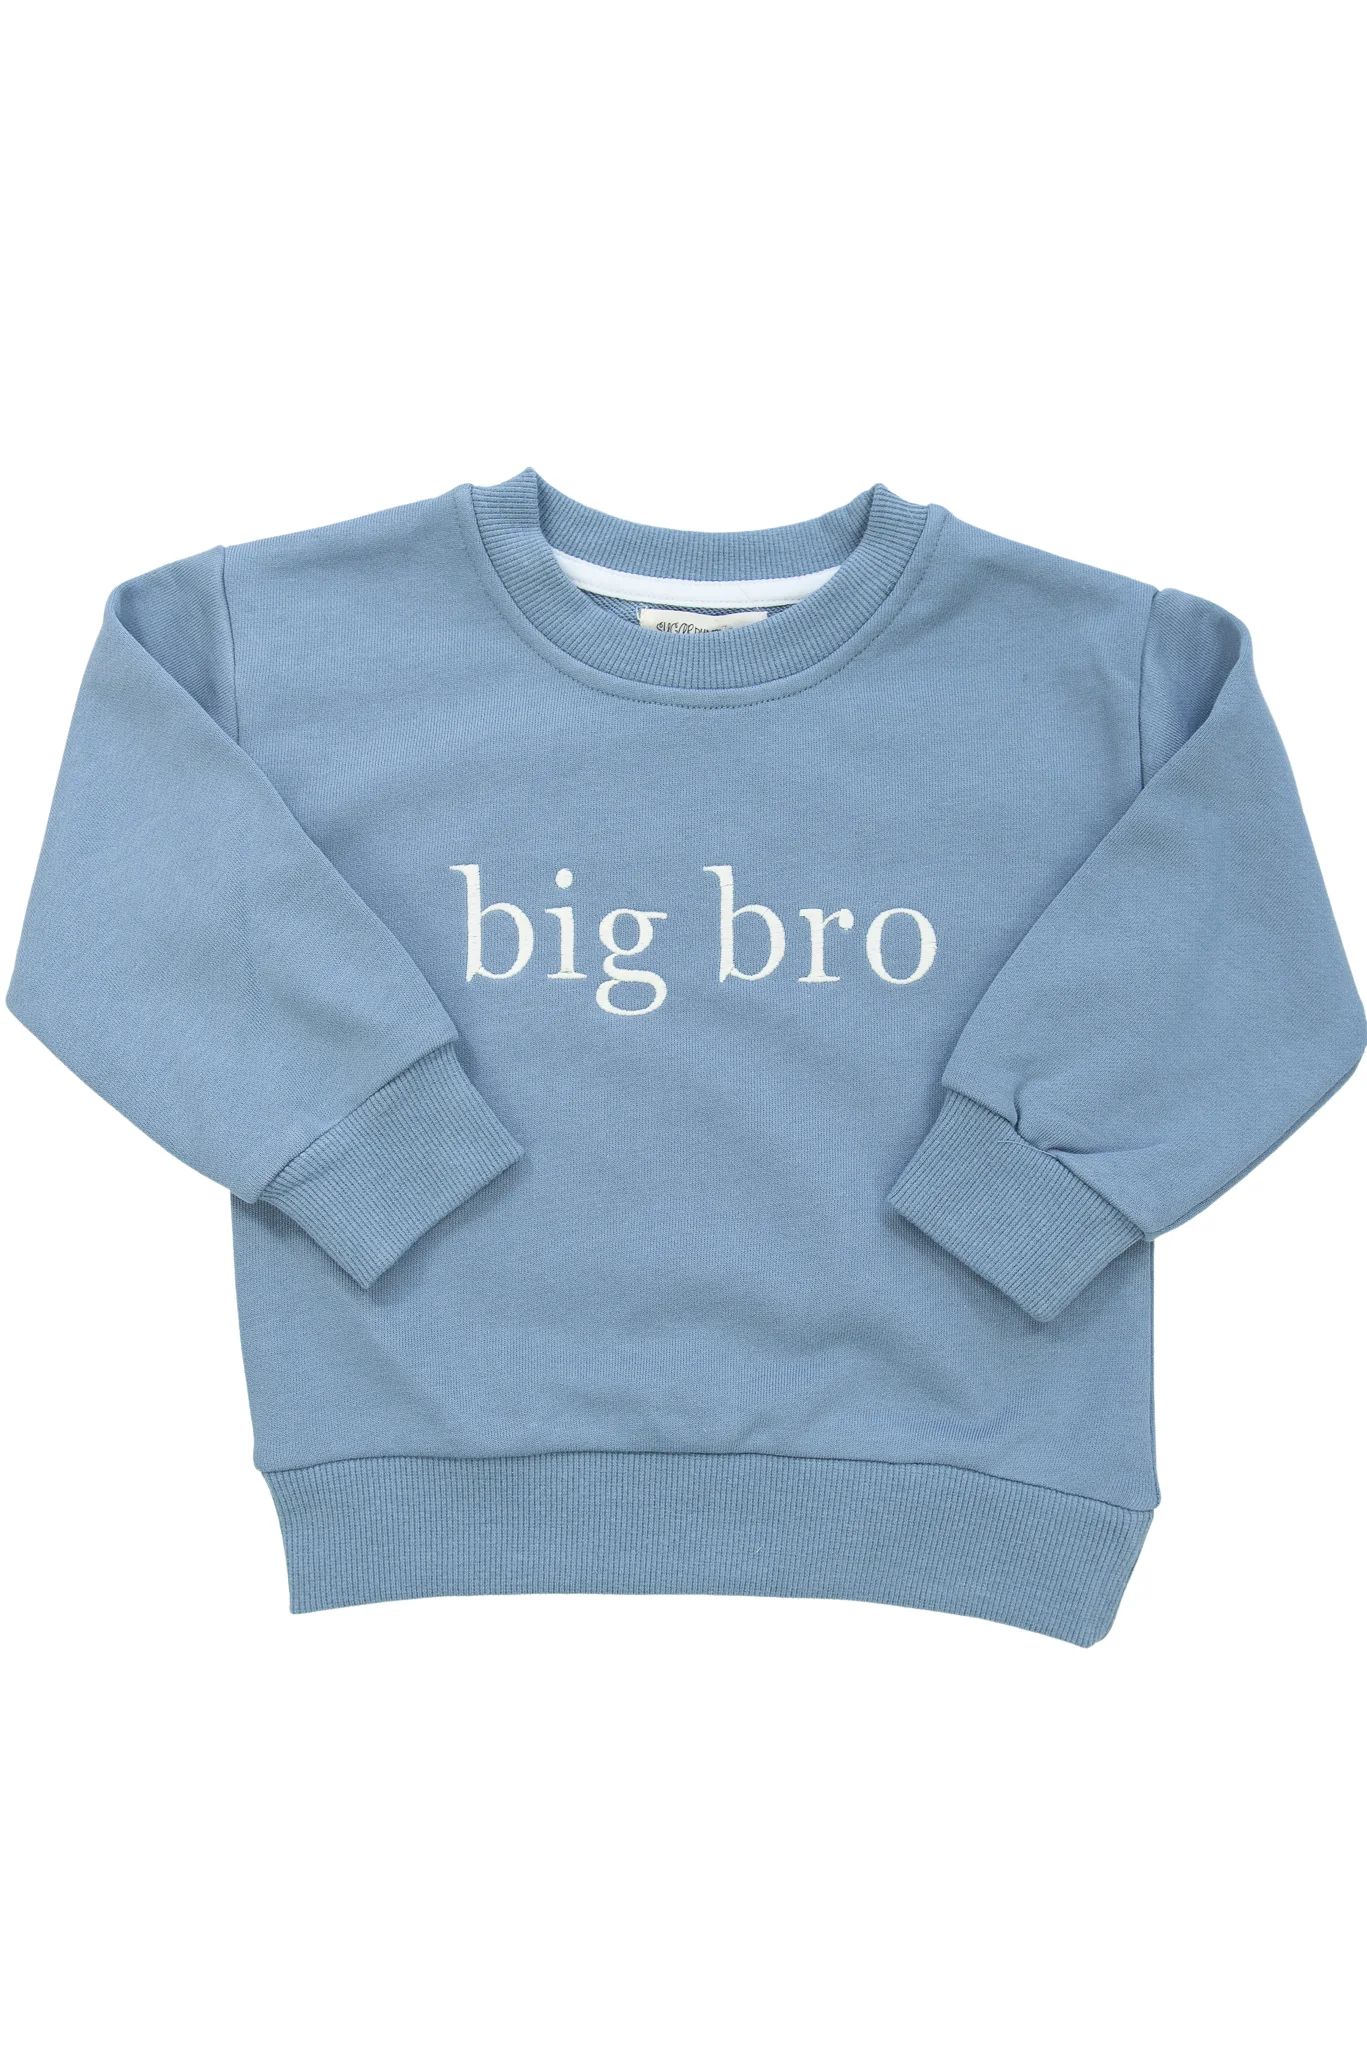 Boys Big Bro Sweatshirt | Sugar Dumplin' Kids